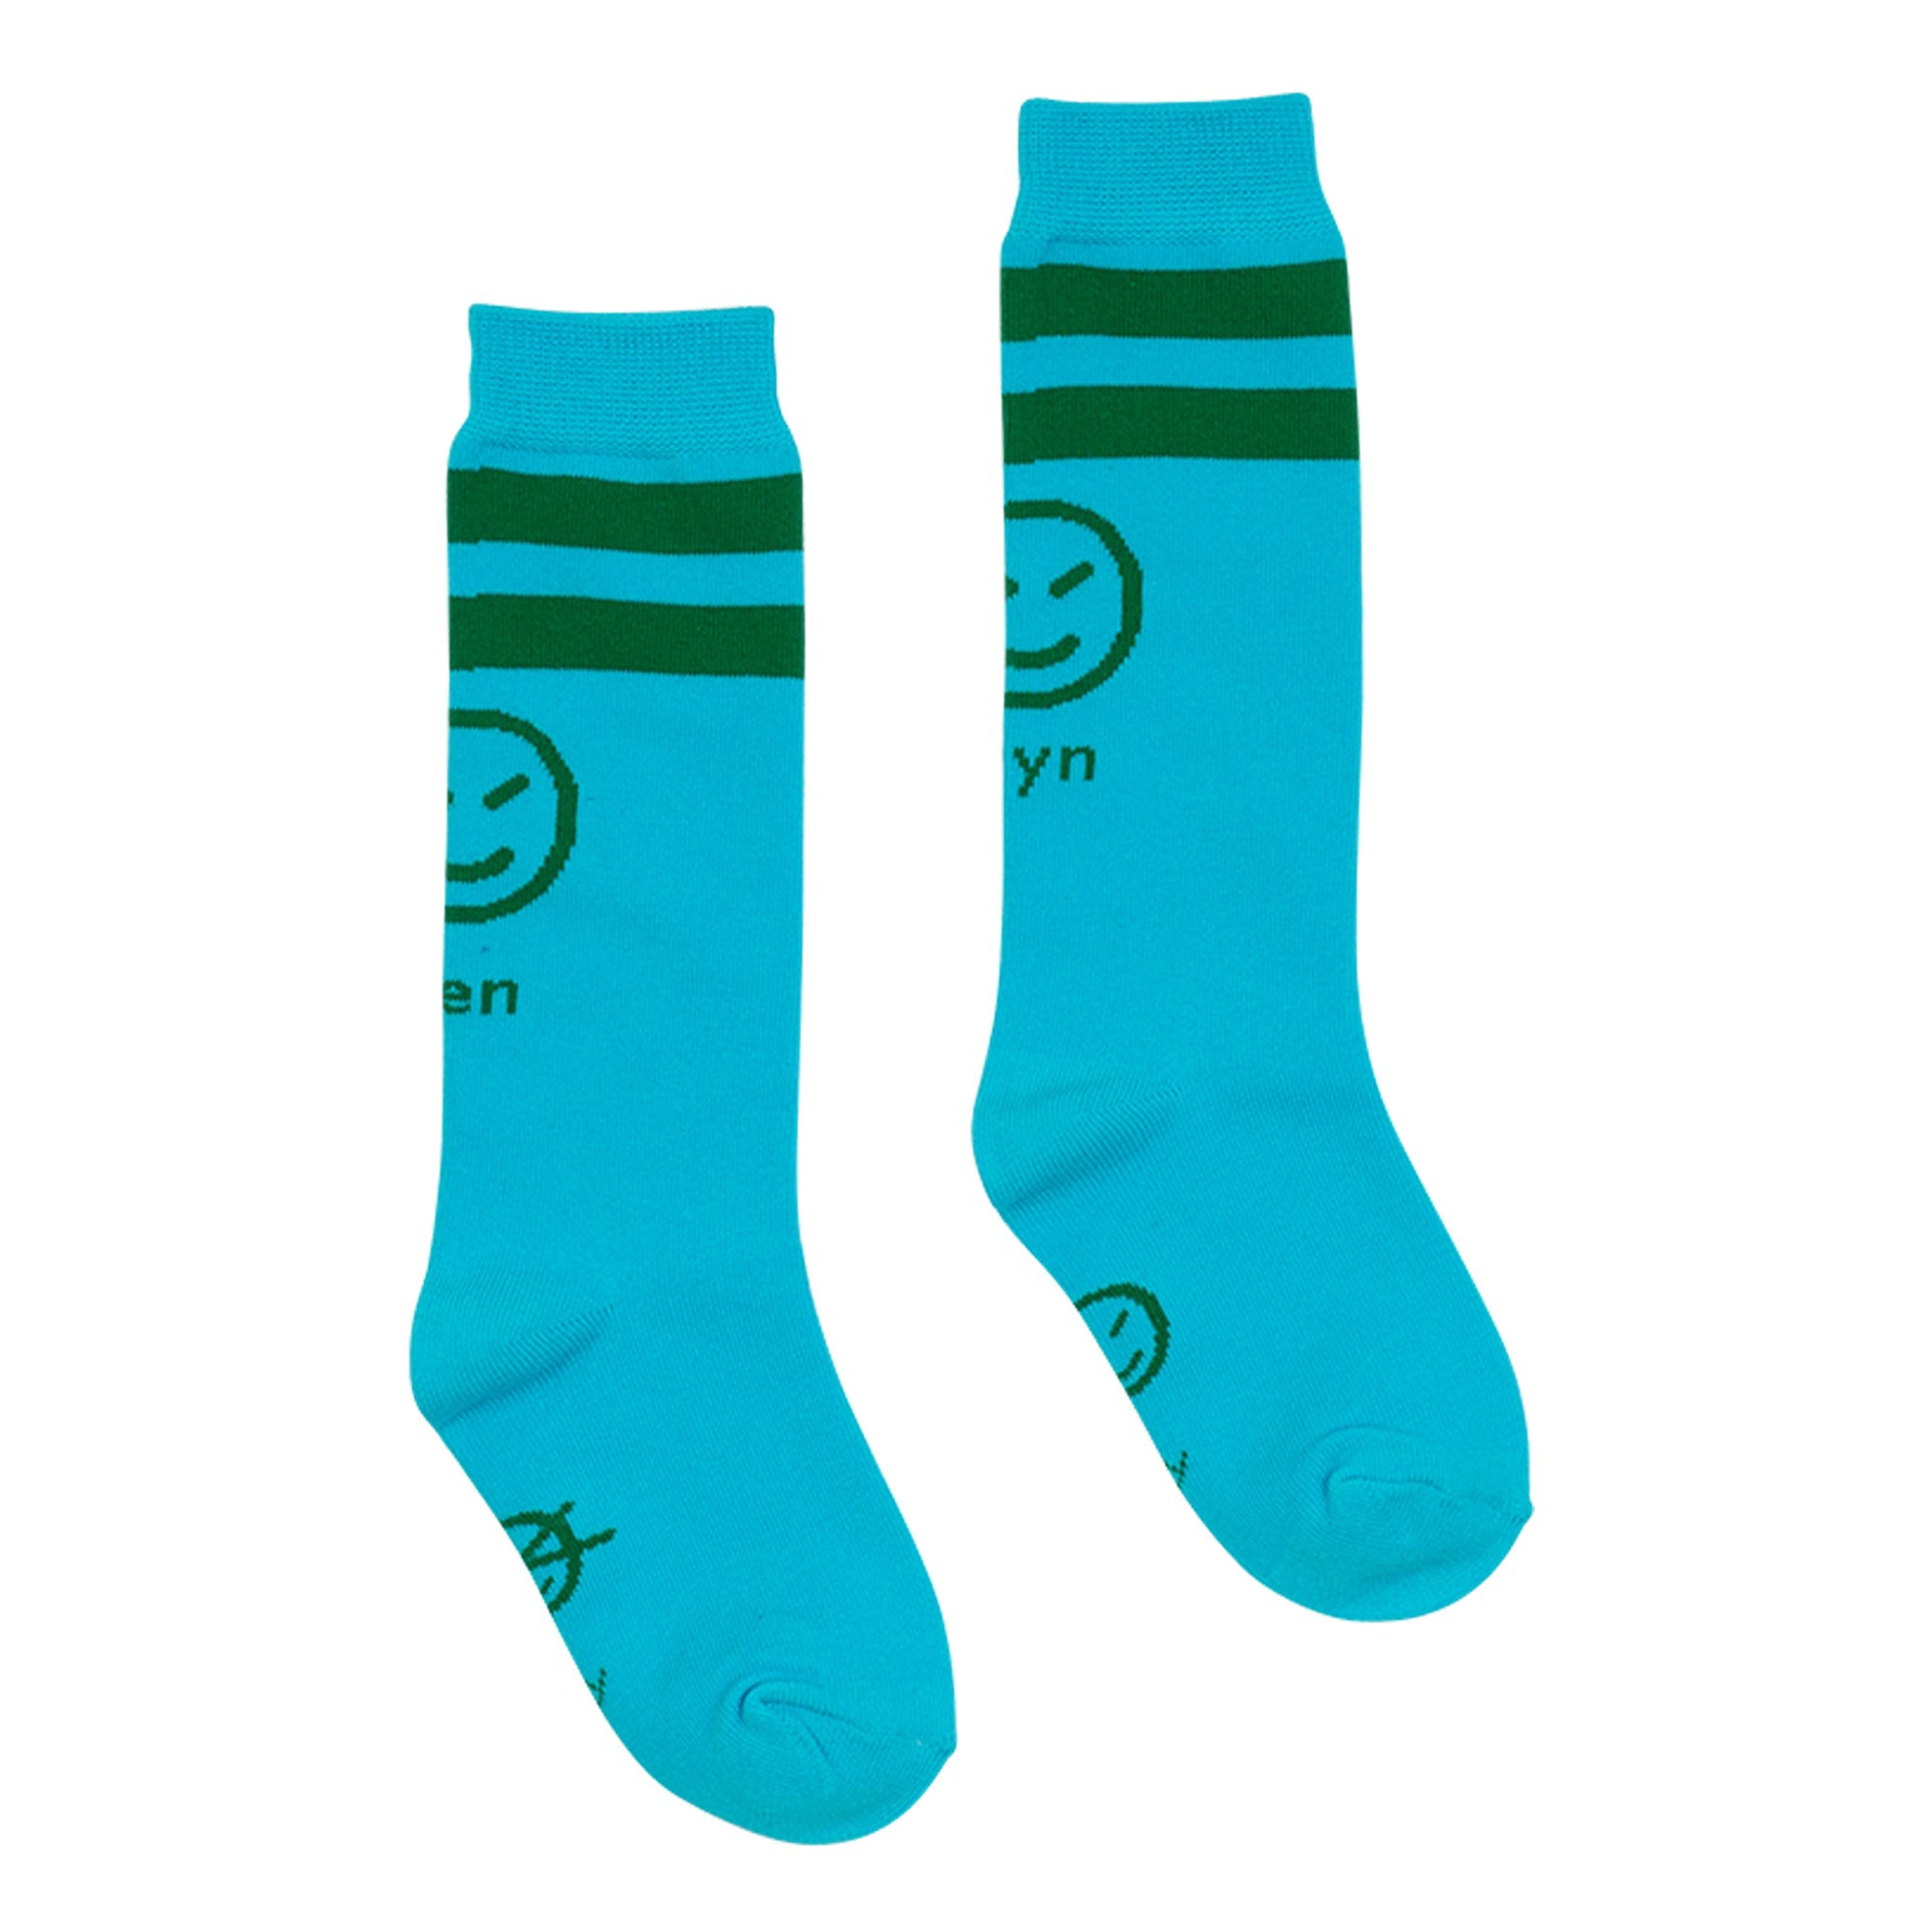 Vela Wynken Sock - Turquoise